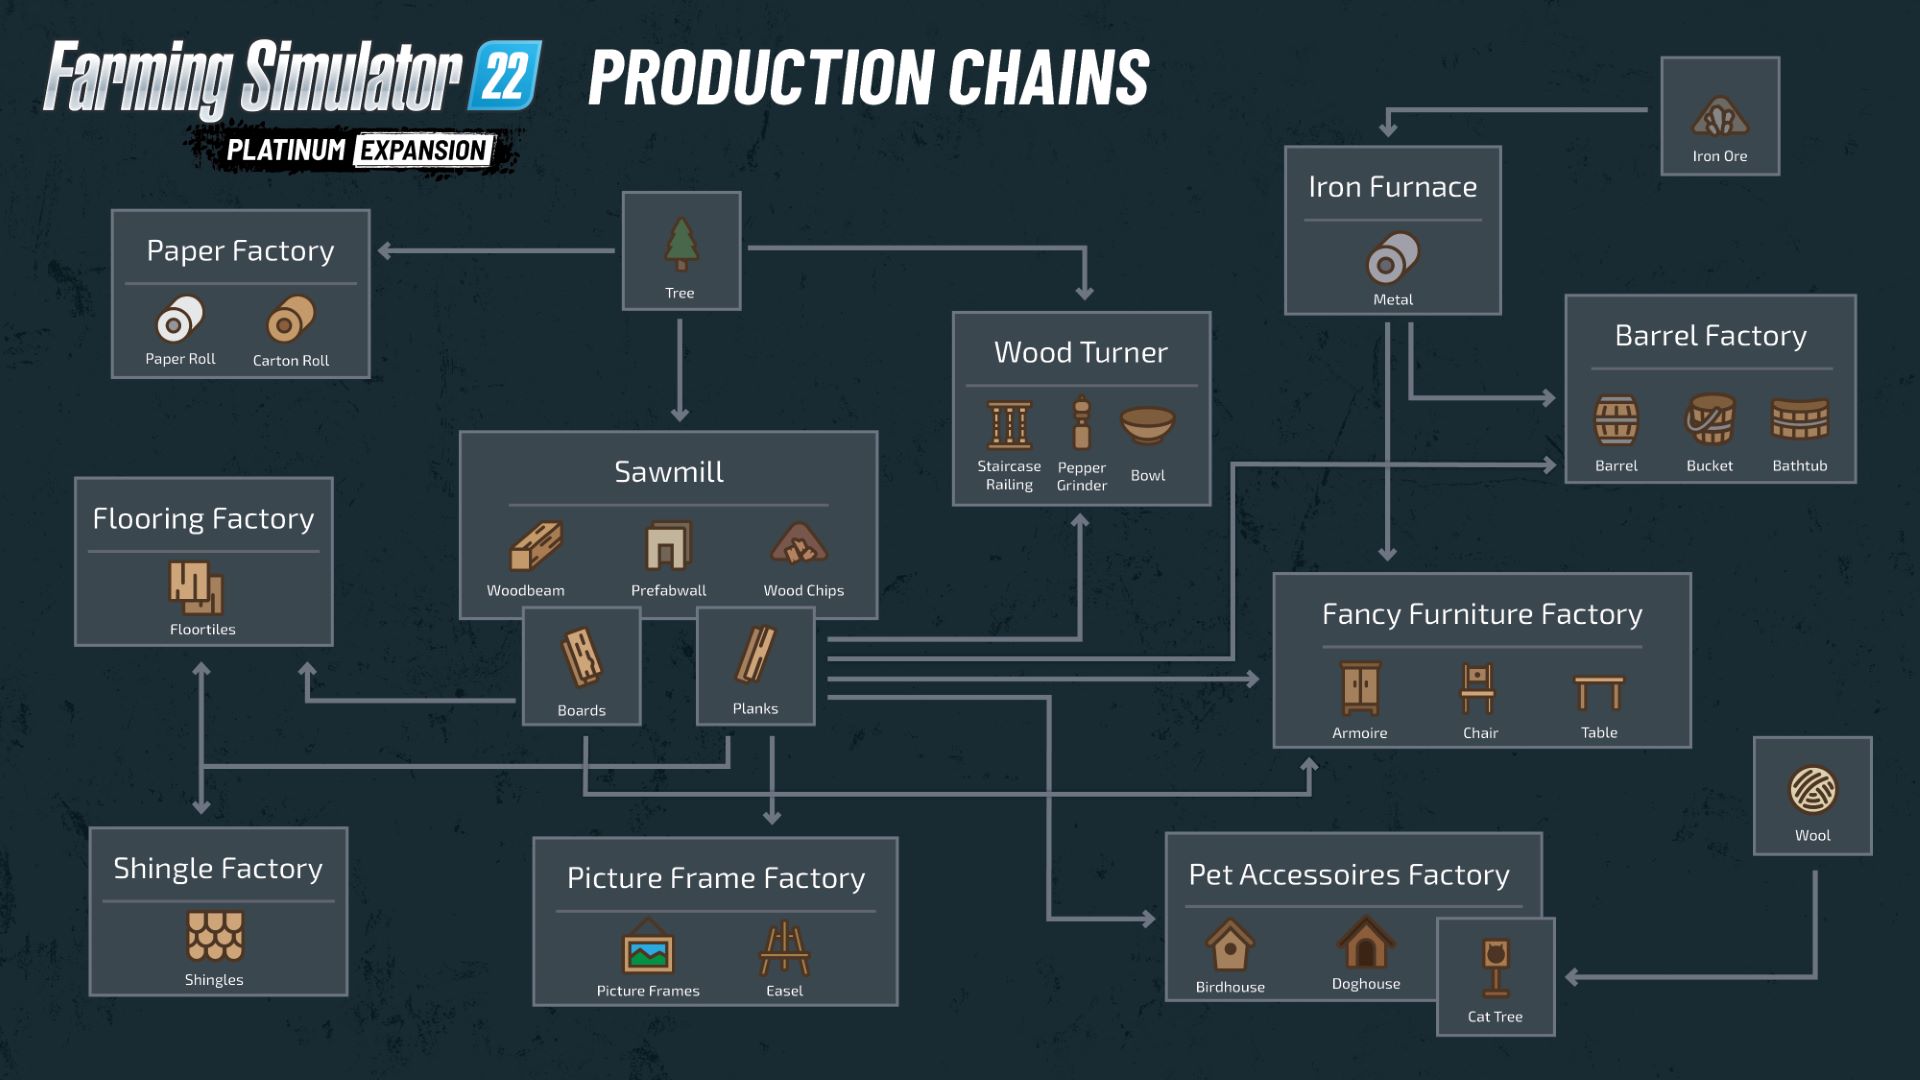 Production Chains for Platinum Expansion image 1